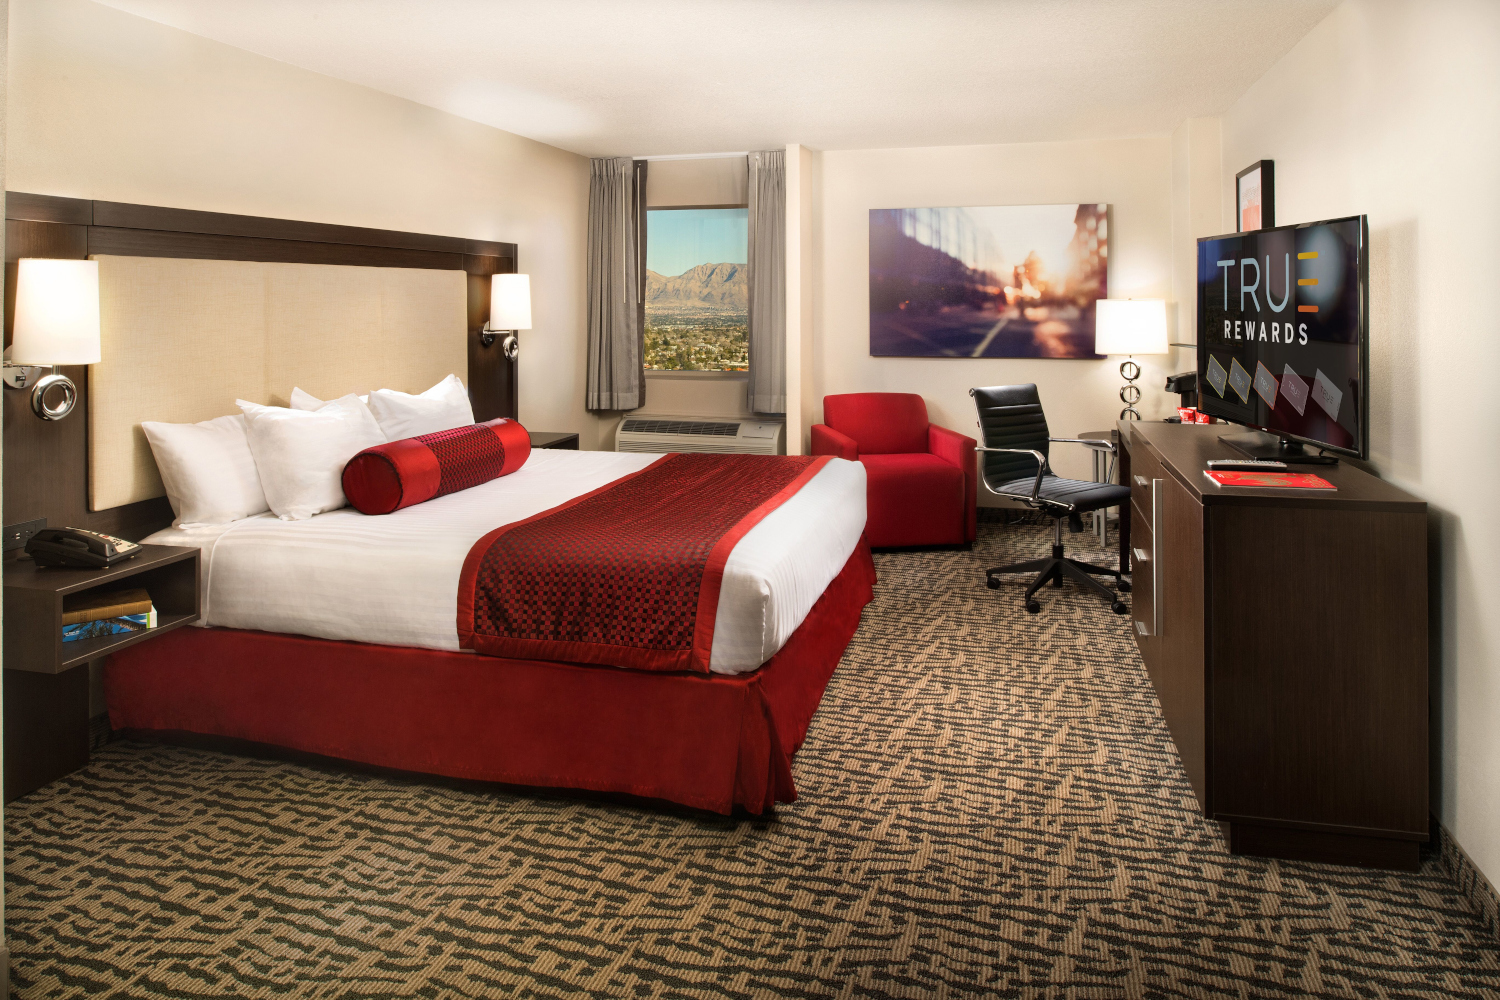 How To Get Free Rooms In Las Vegas Hotels chuckldesignerd